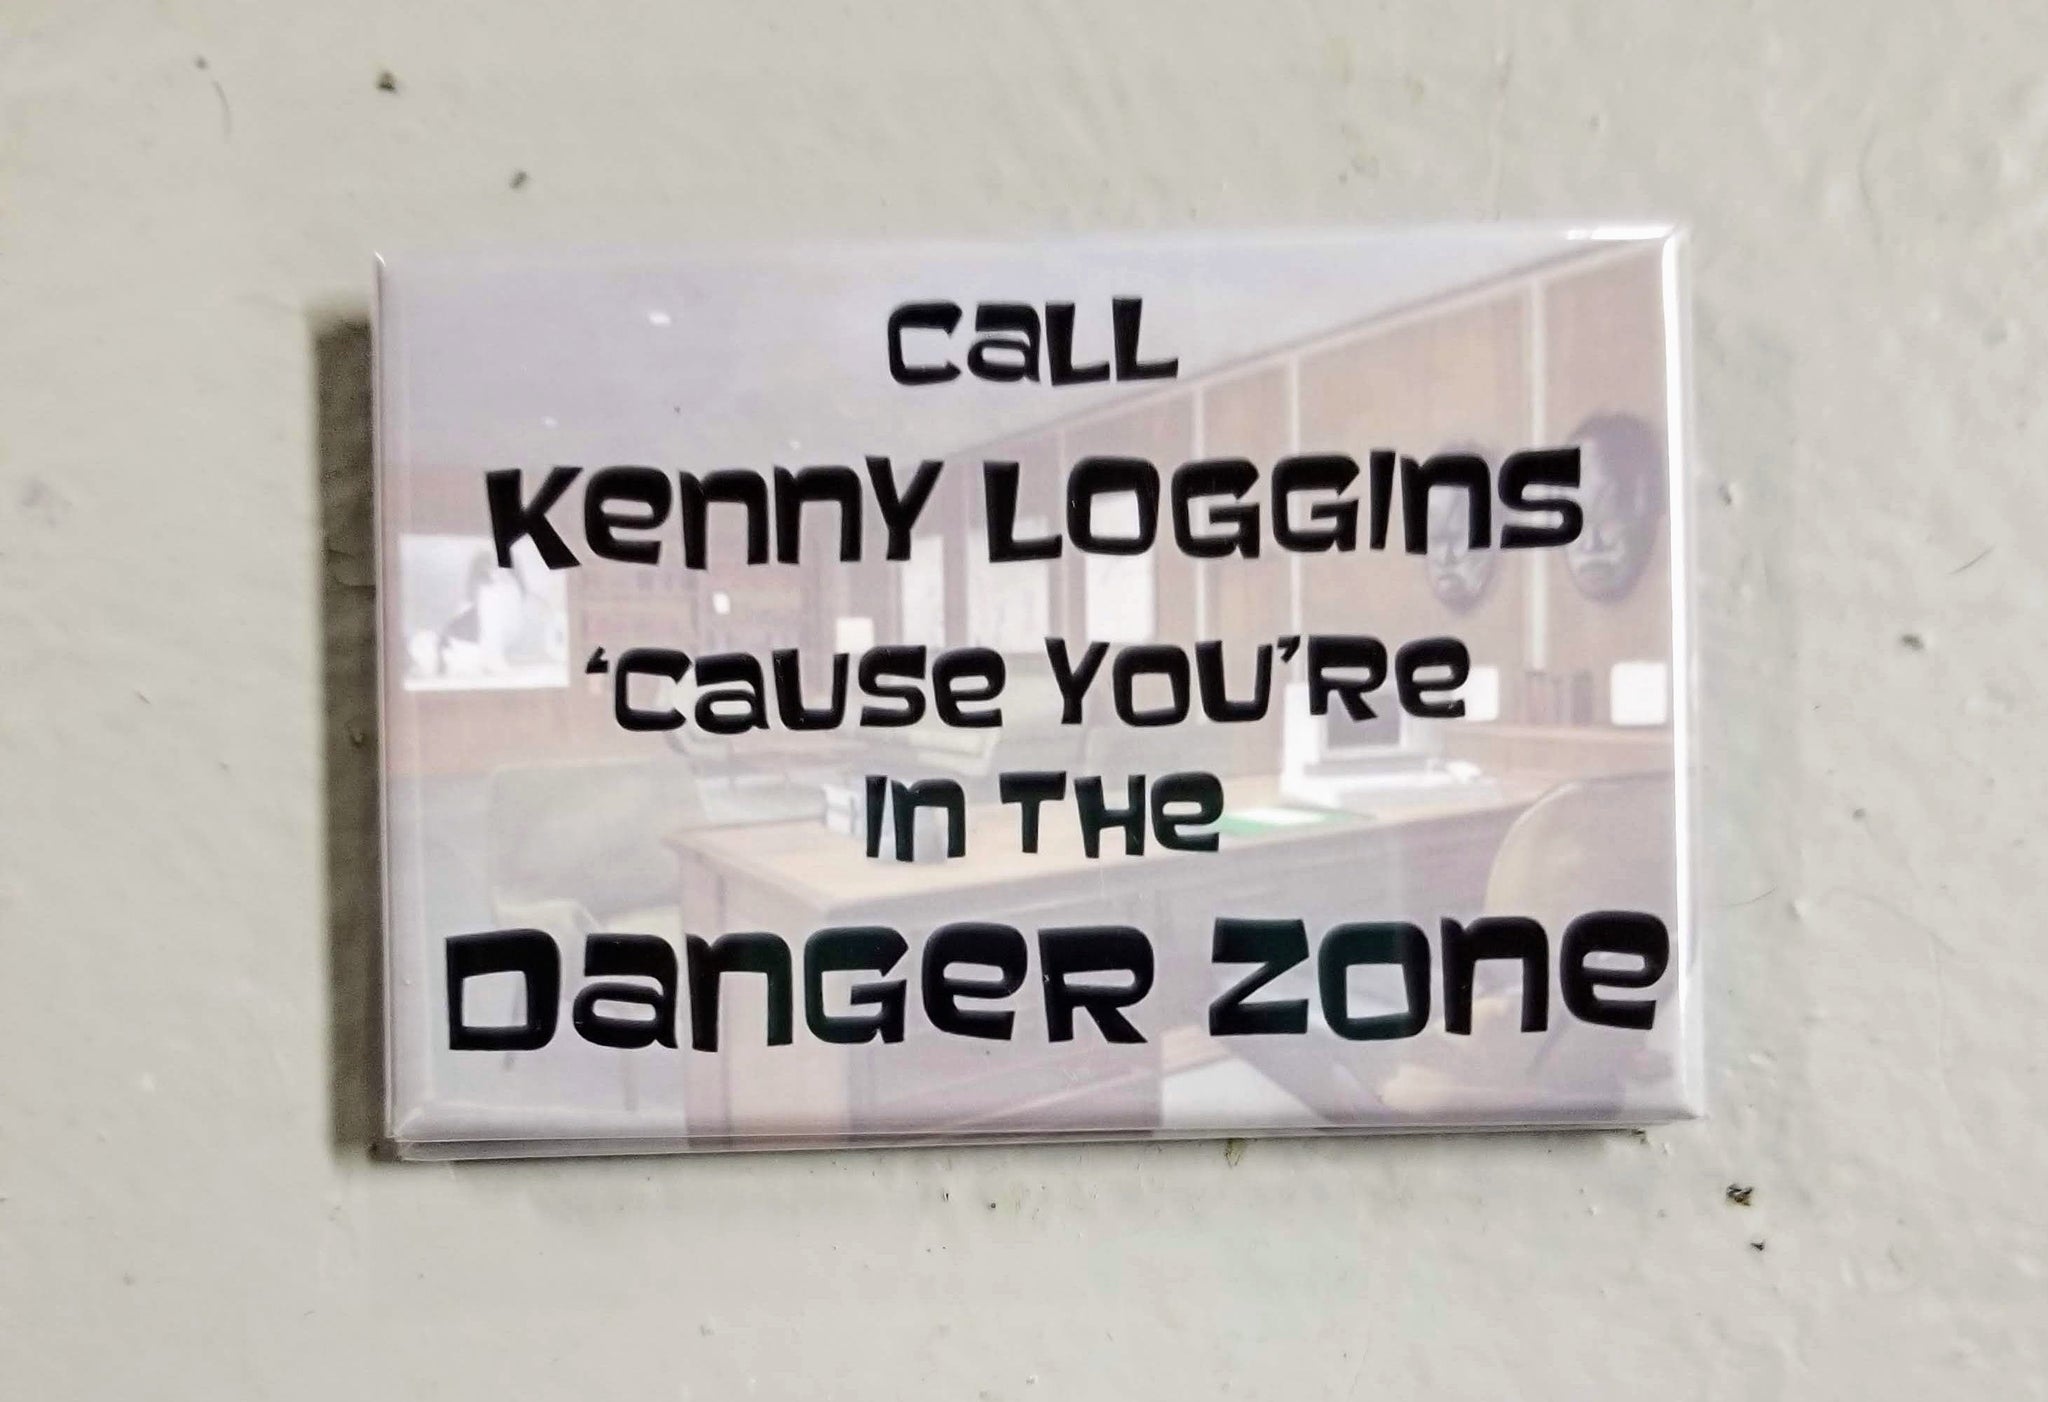 Danger Zone Archer tv quote refrigerator magnet